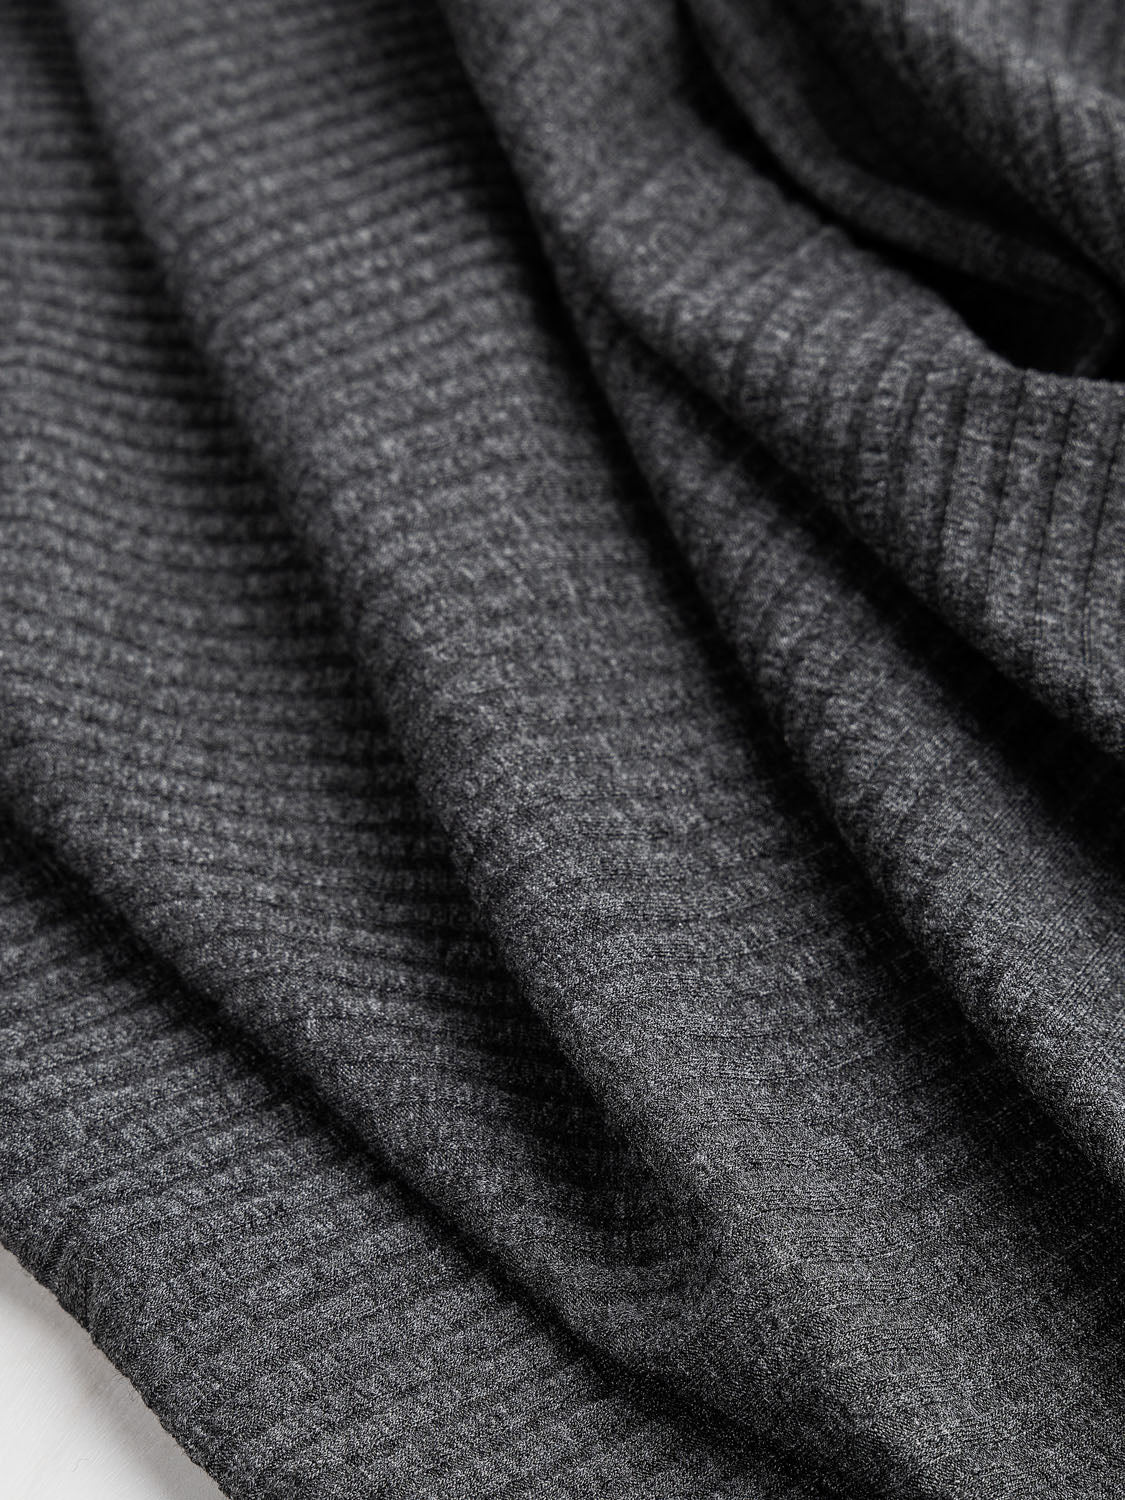 How to Finish Knit Fabric Edges • Heather Handmade